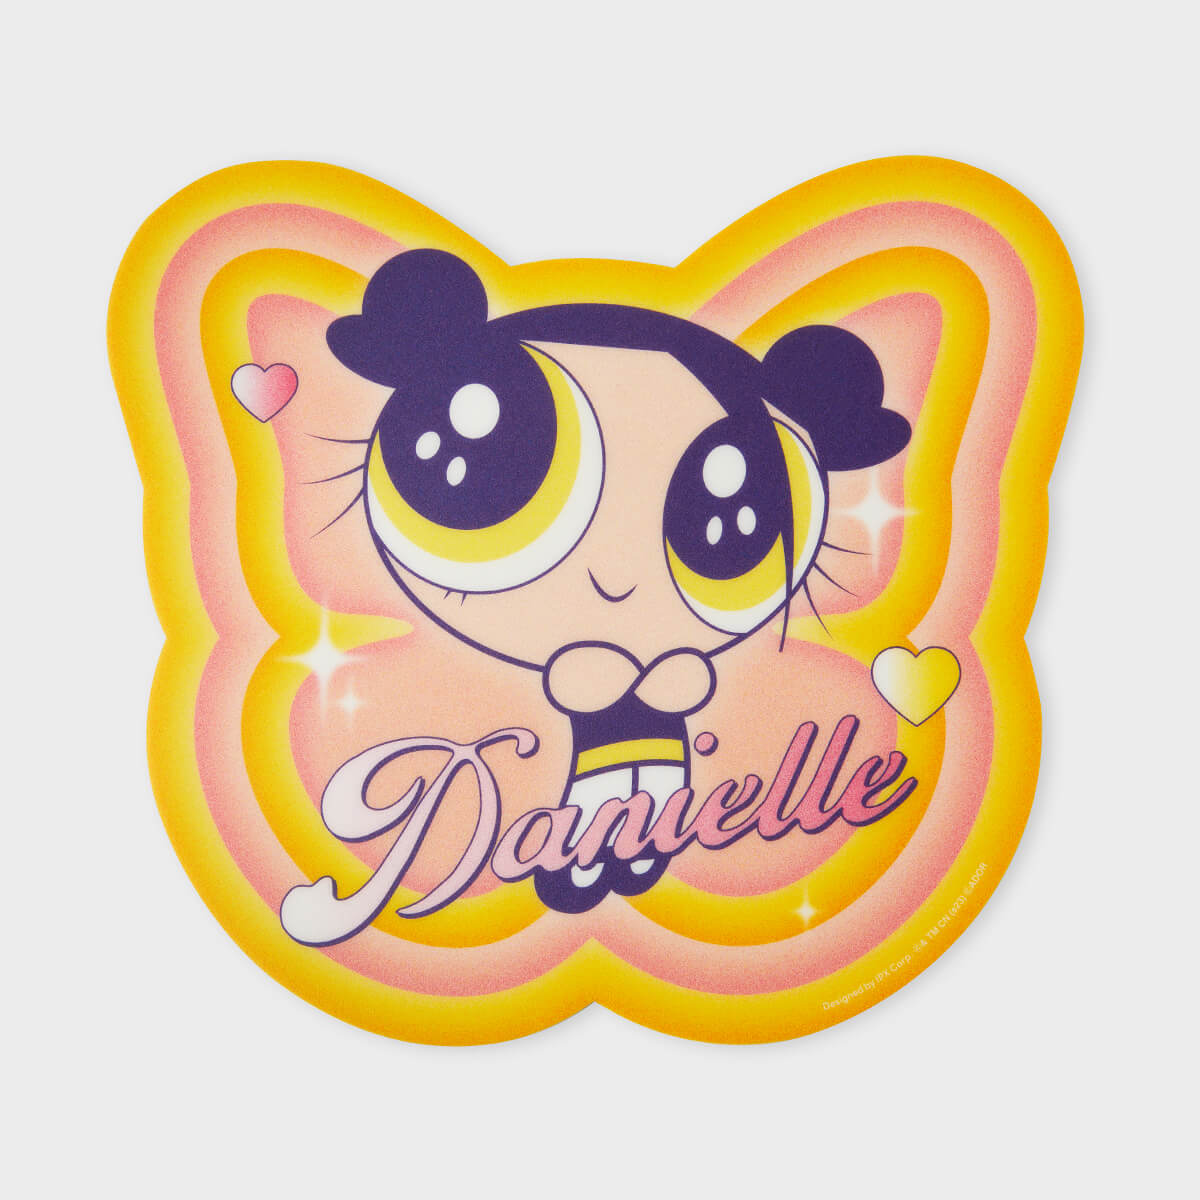 THE POWERPUFF GIRLS X NJ Mouse Pad (DANIELLE)